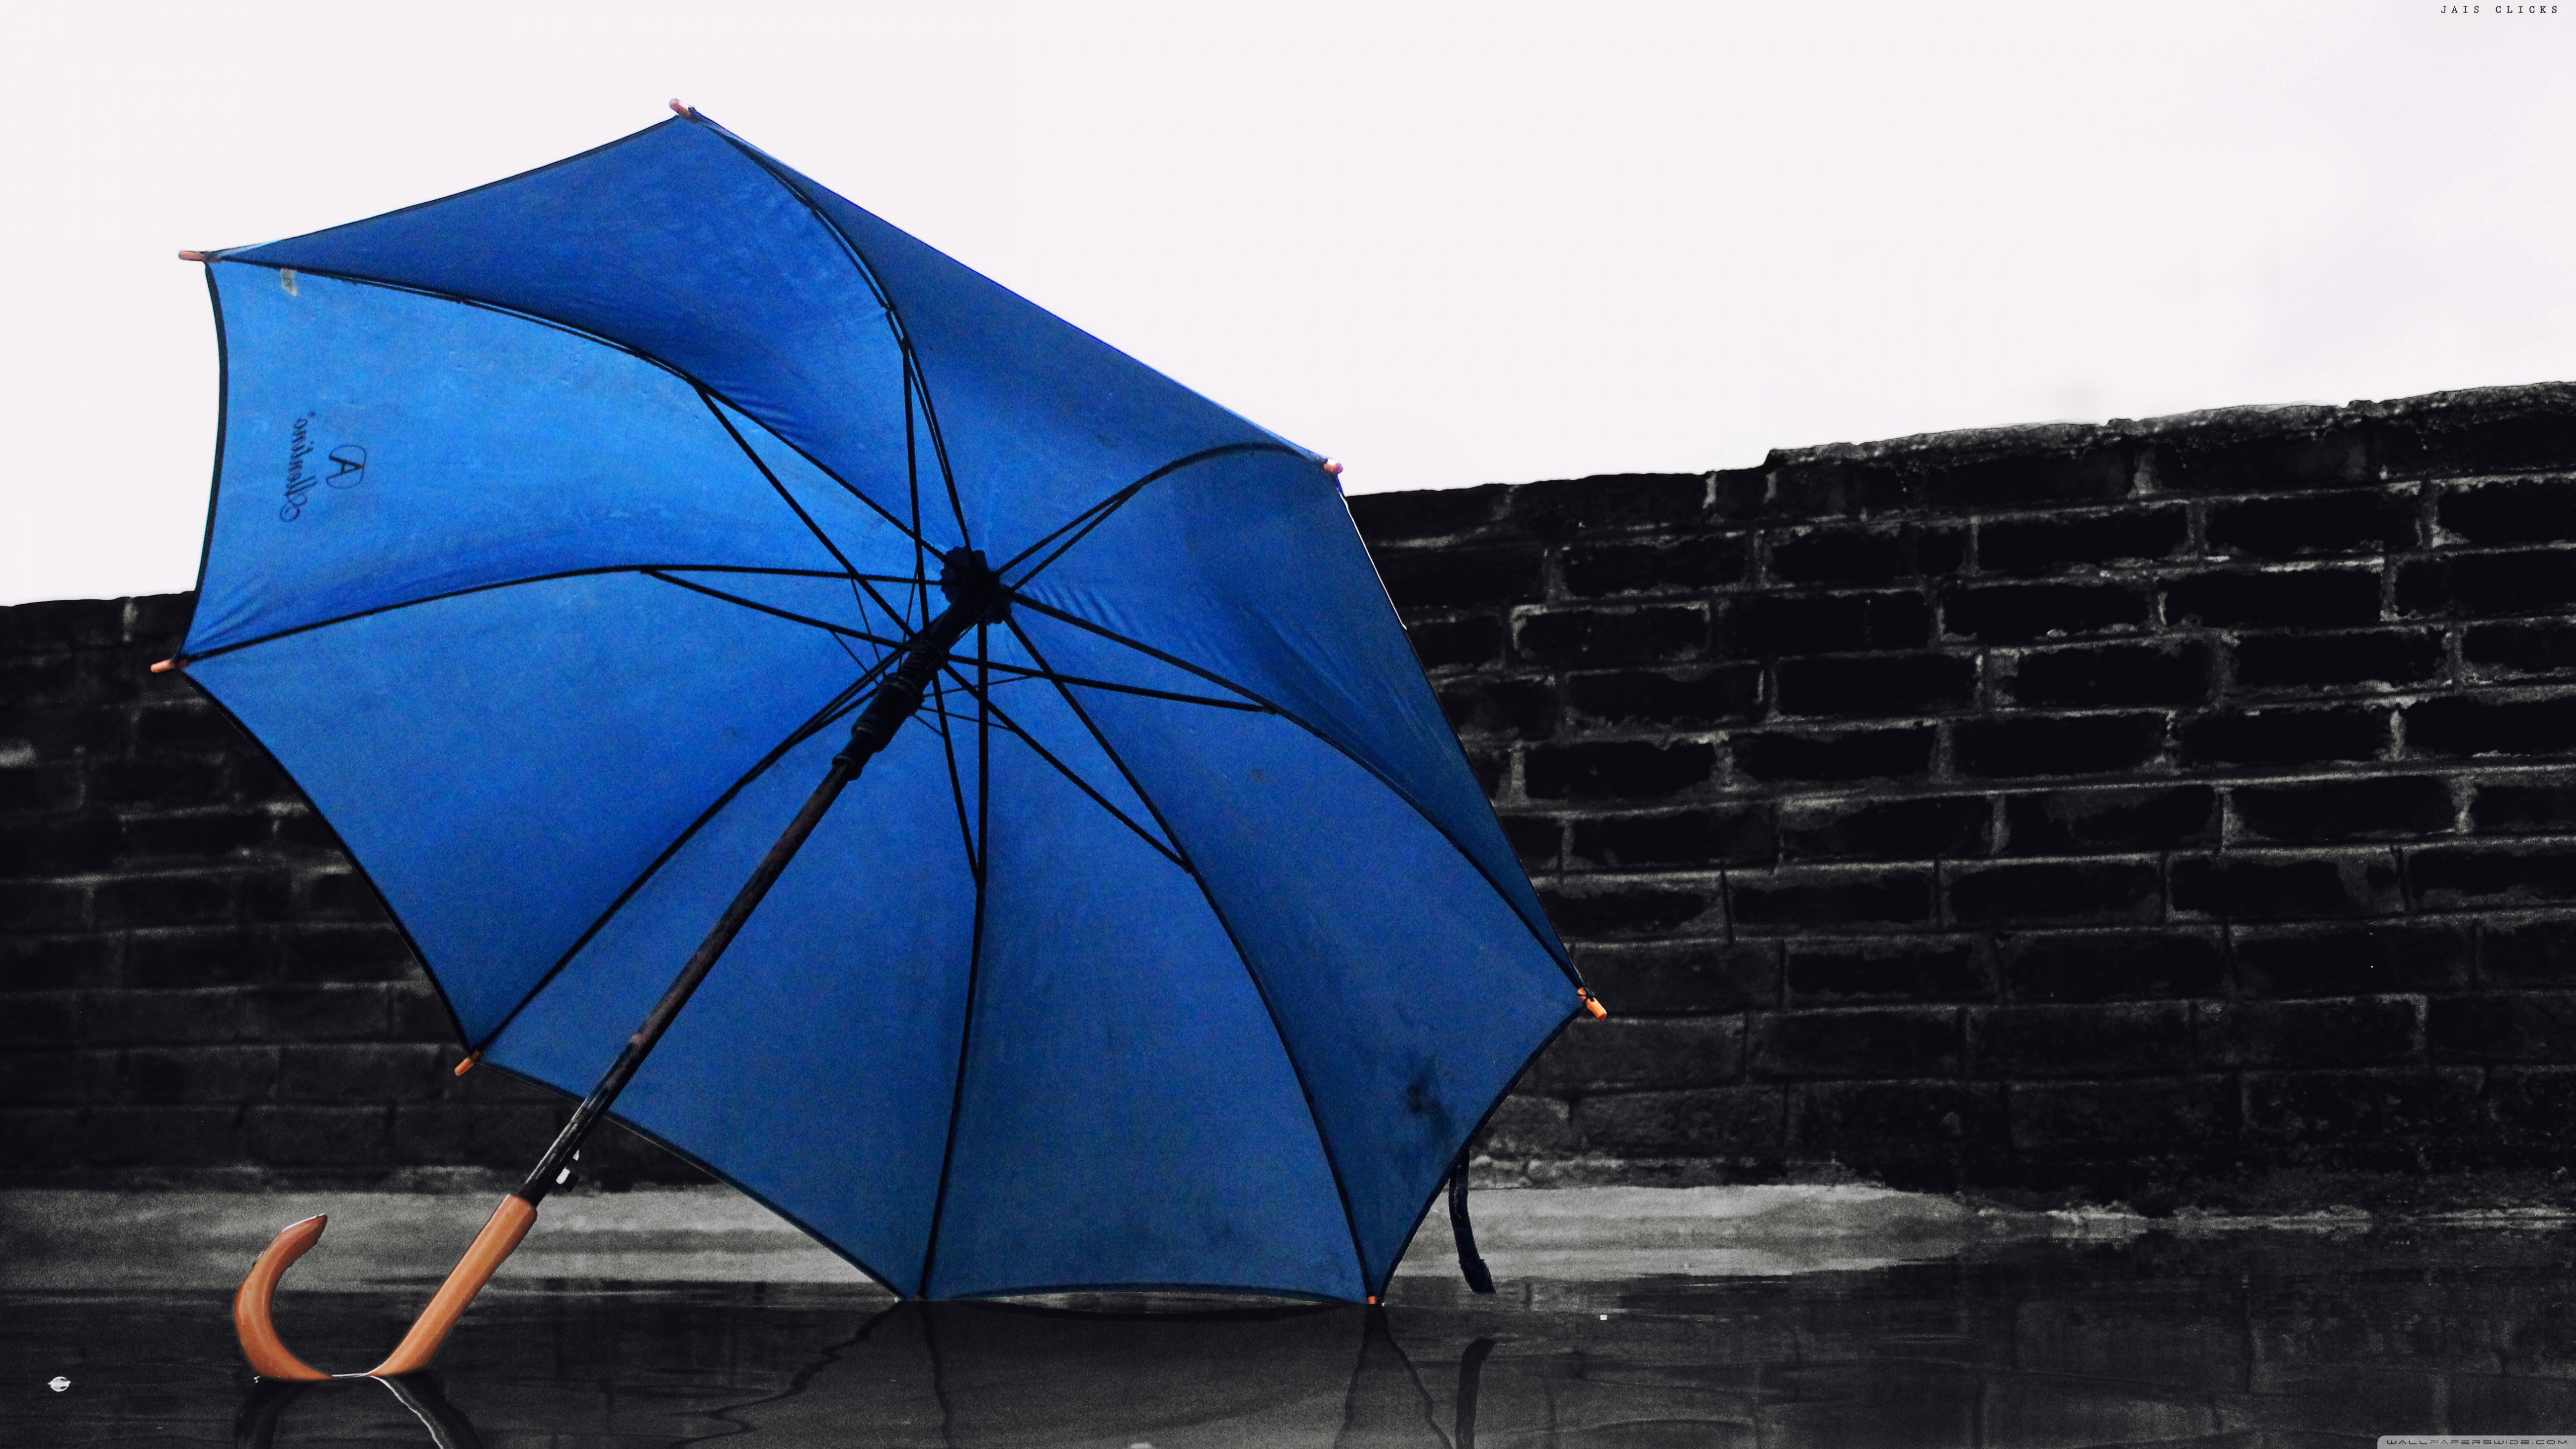 4k Blue Umbrella Wallpaper For Desktop And Mobile Phones , HD Wallpaper & Backgrounds